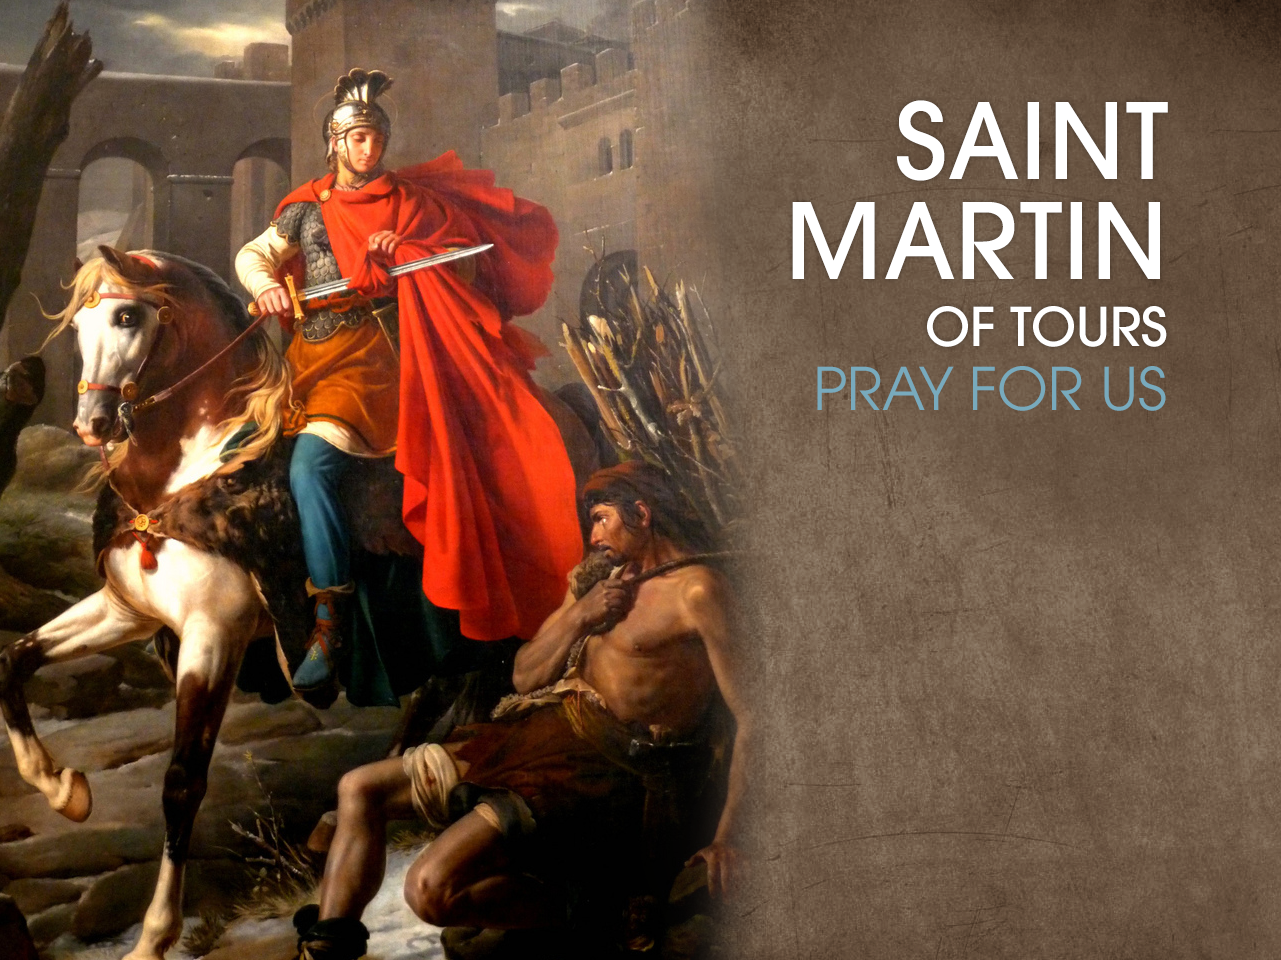 St. Martin of Tours